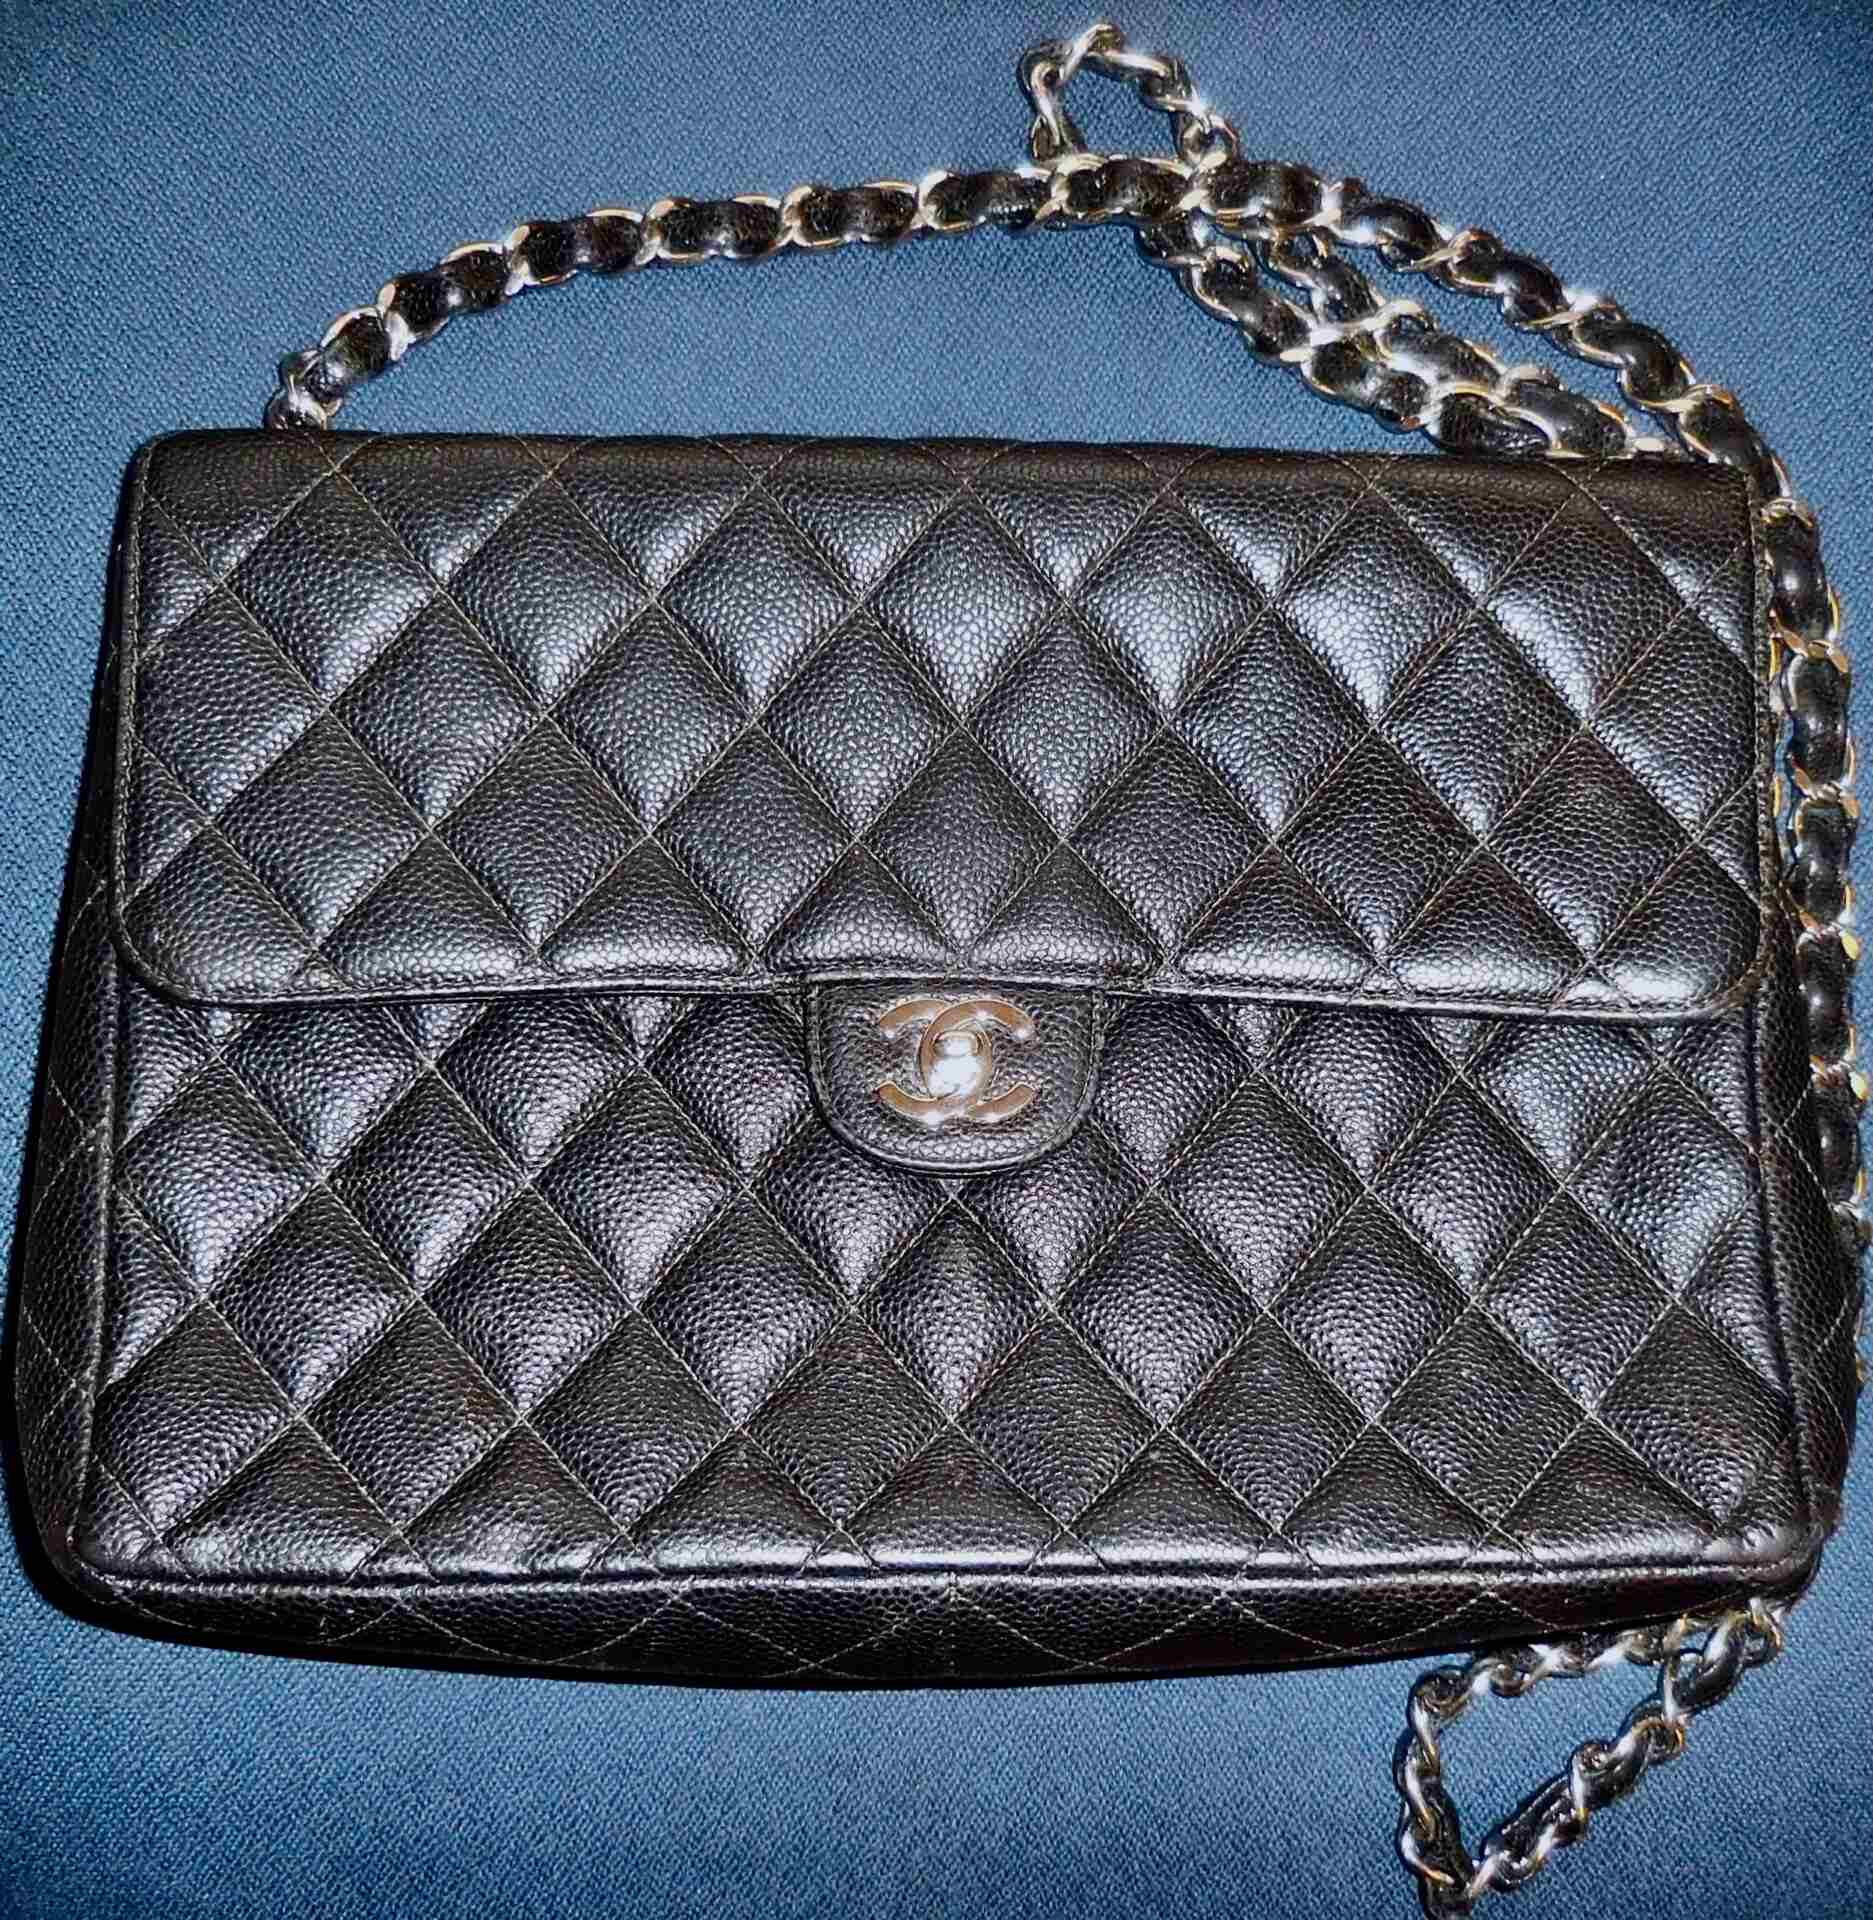 Vintage Black Chanel Handbag Repair by Linda LLC After